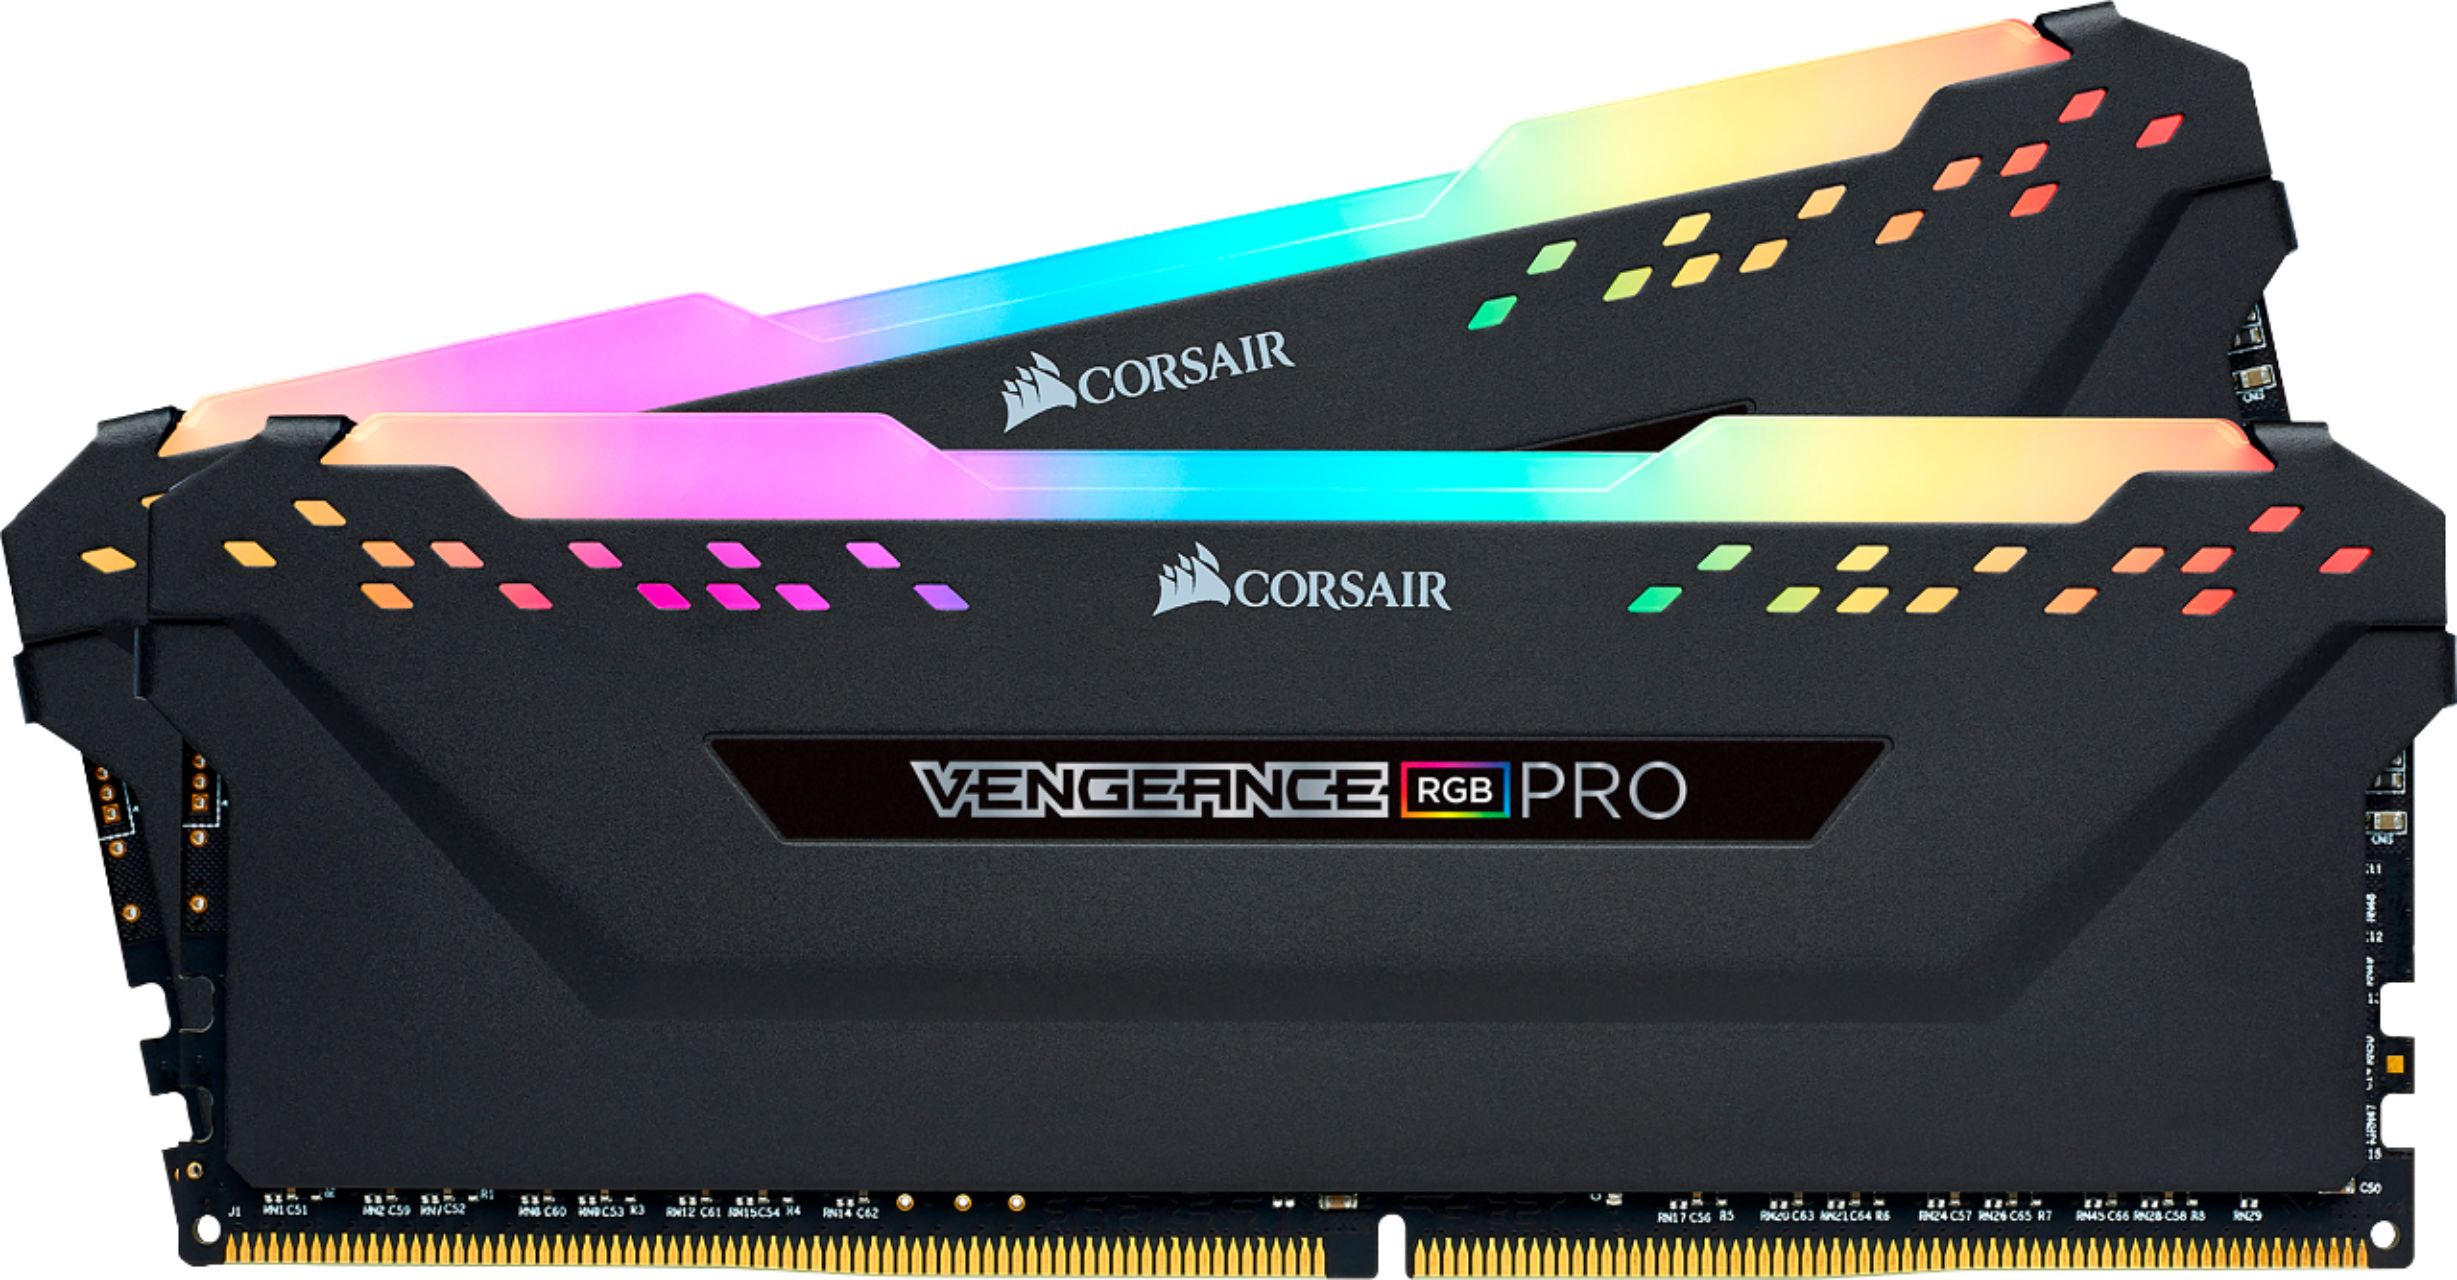 Corsair Vengeance Pro Gb Pk X Gb Mhz Ddr C Dimm Desktop